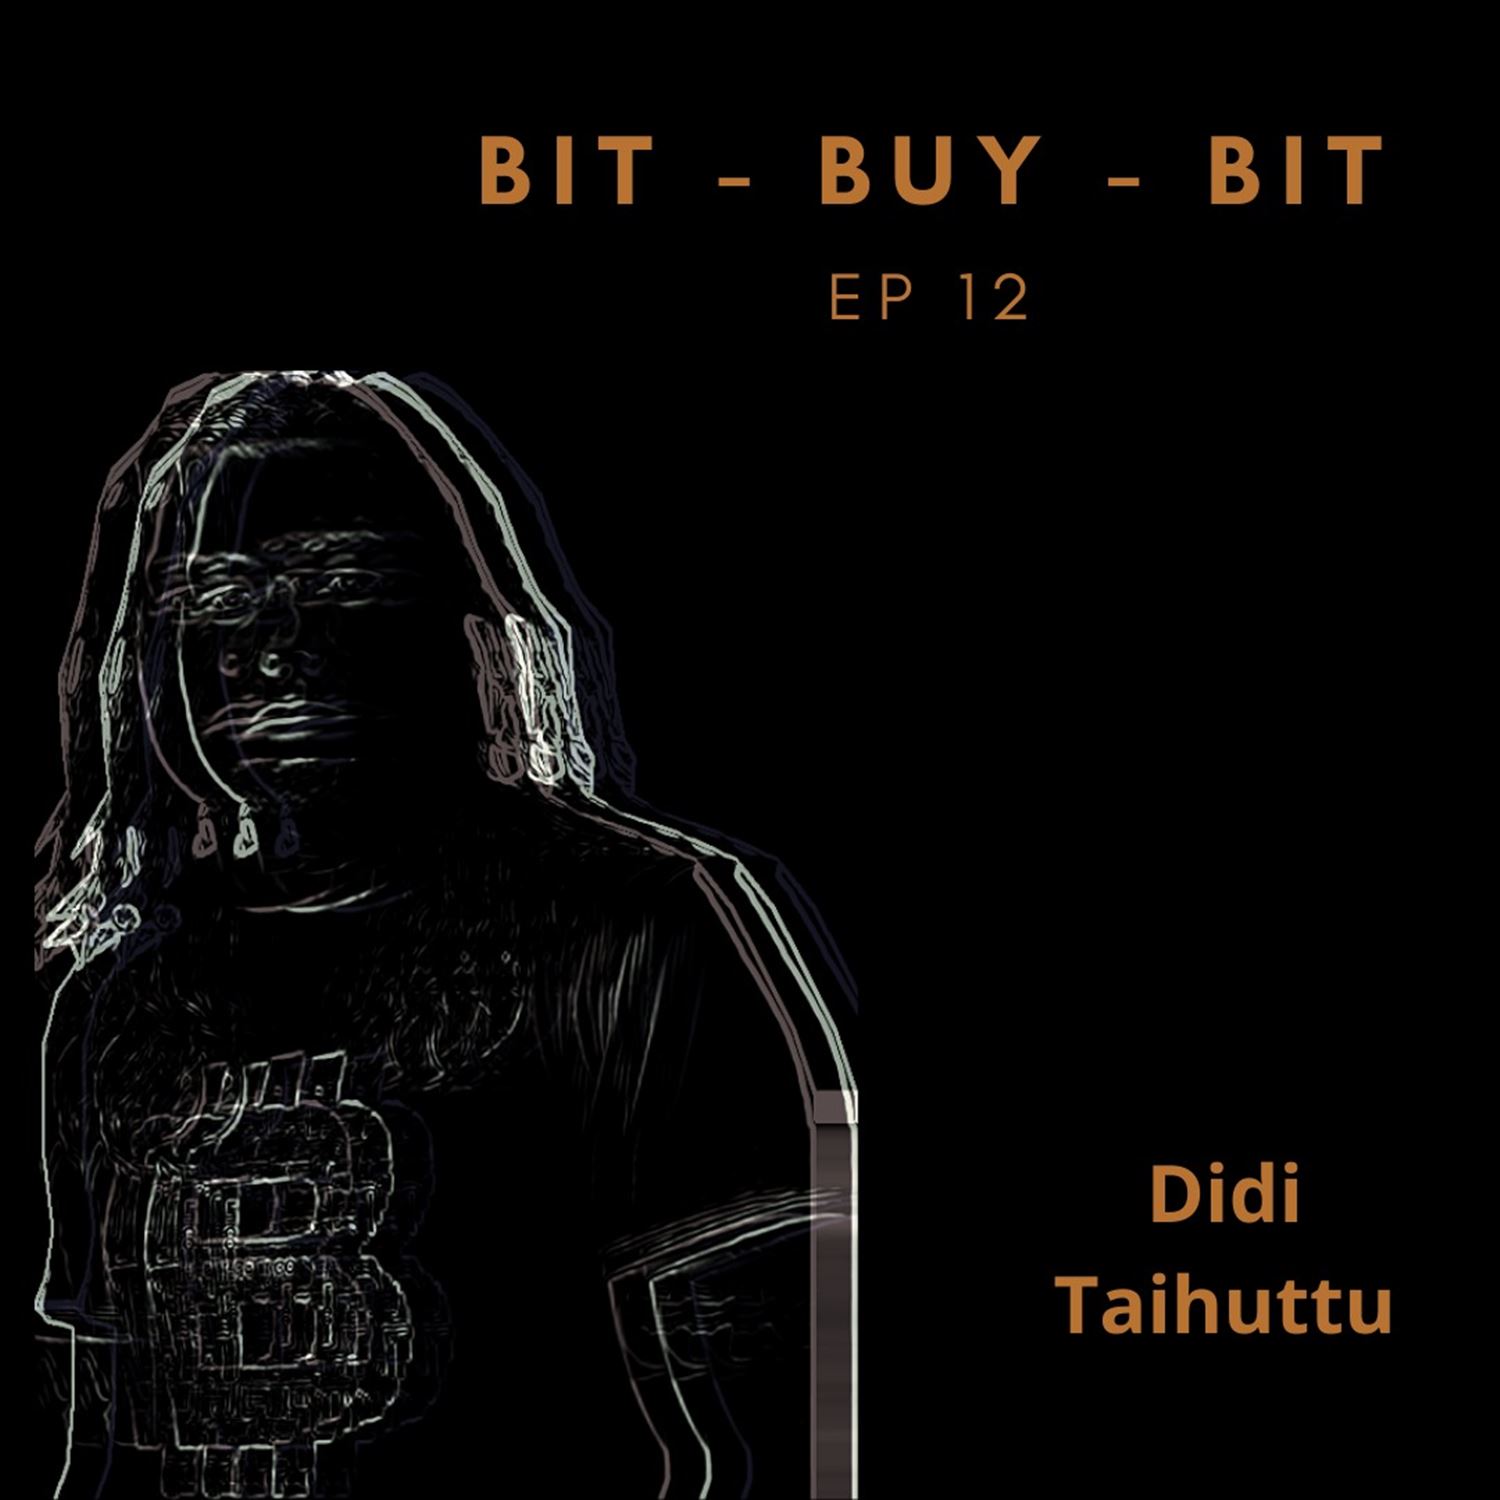 EP12 Bitcoin podcast with Didi Taihuttu